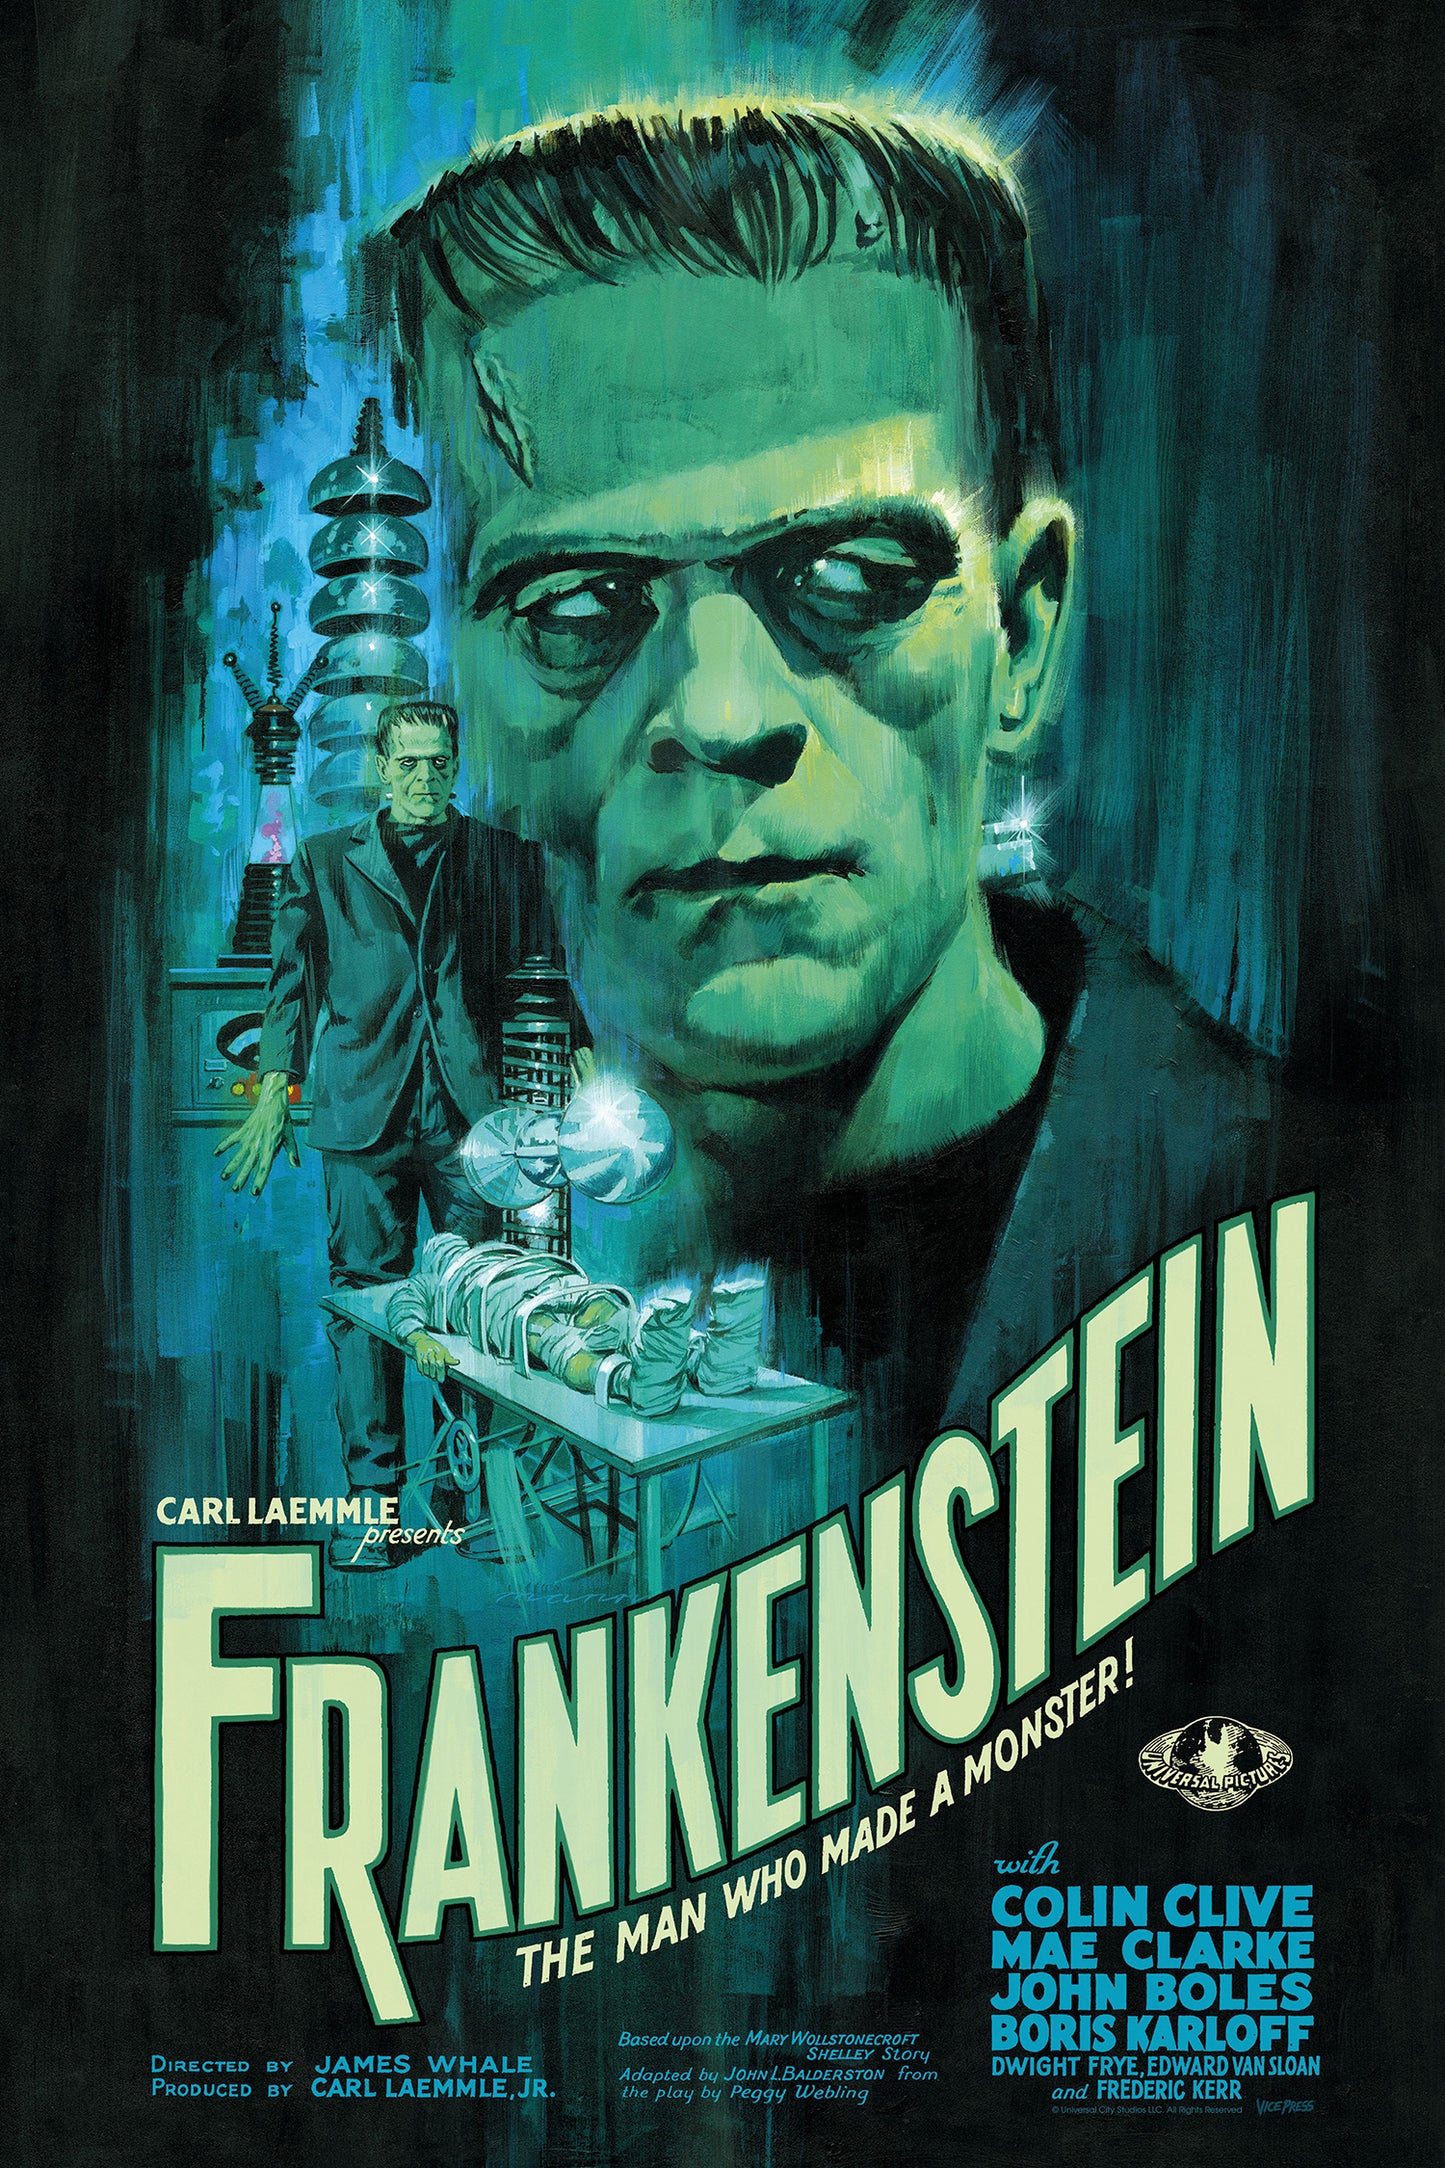 Paul Mann "Frankenstein"